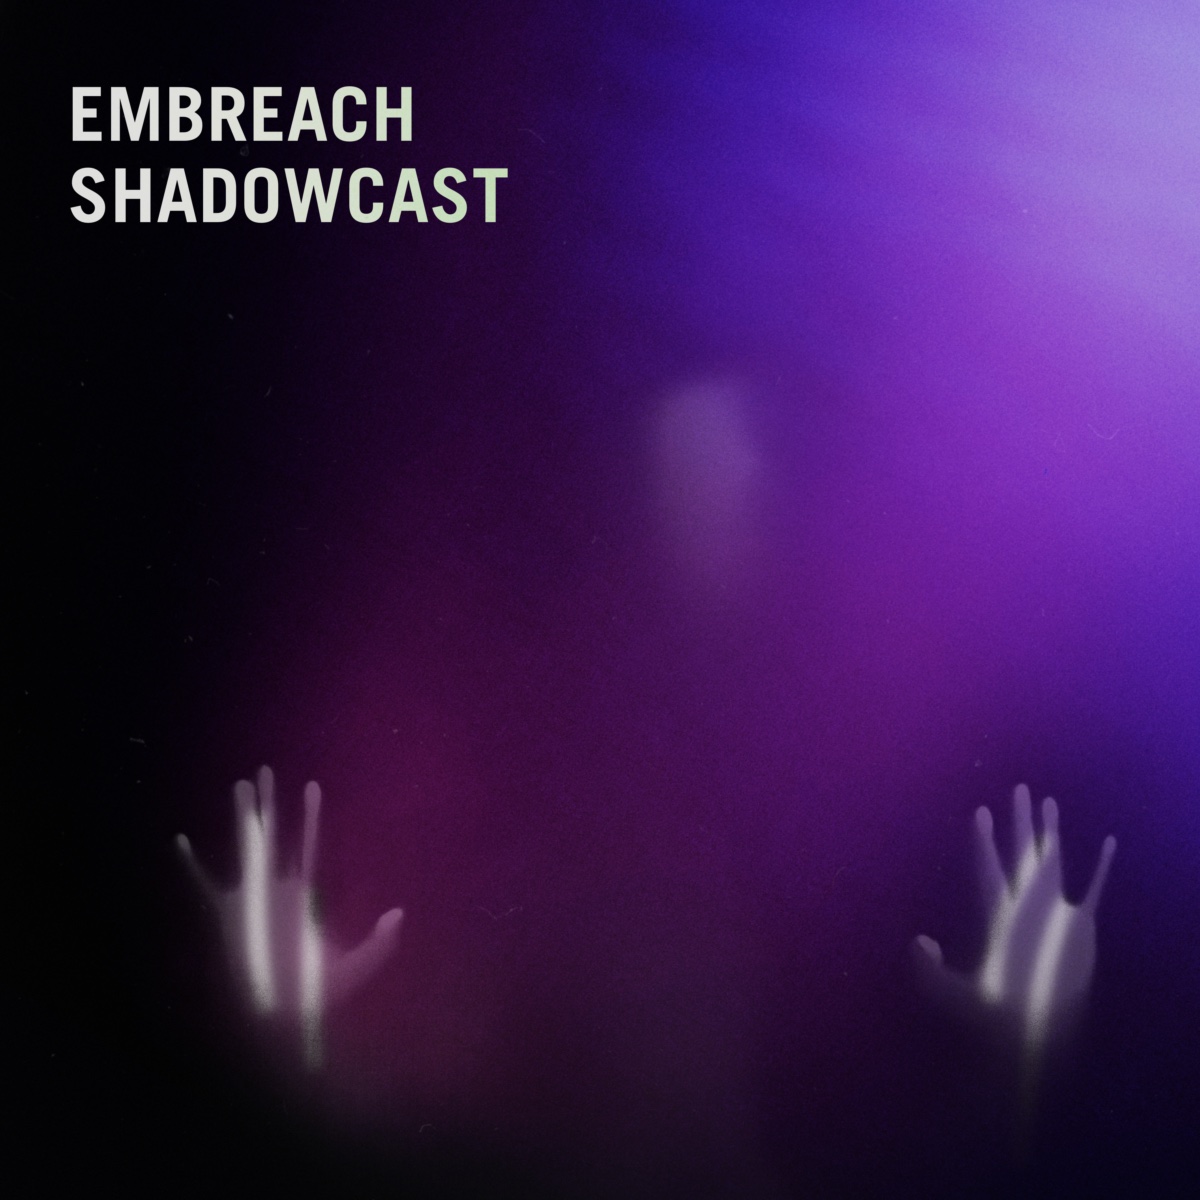 Cover art for Embreach's new single Shadowcast